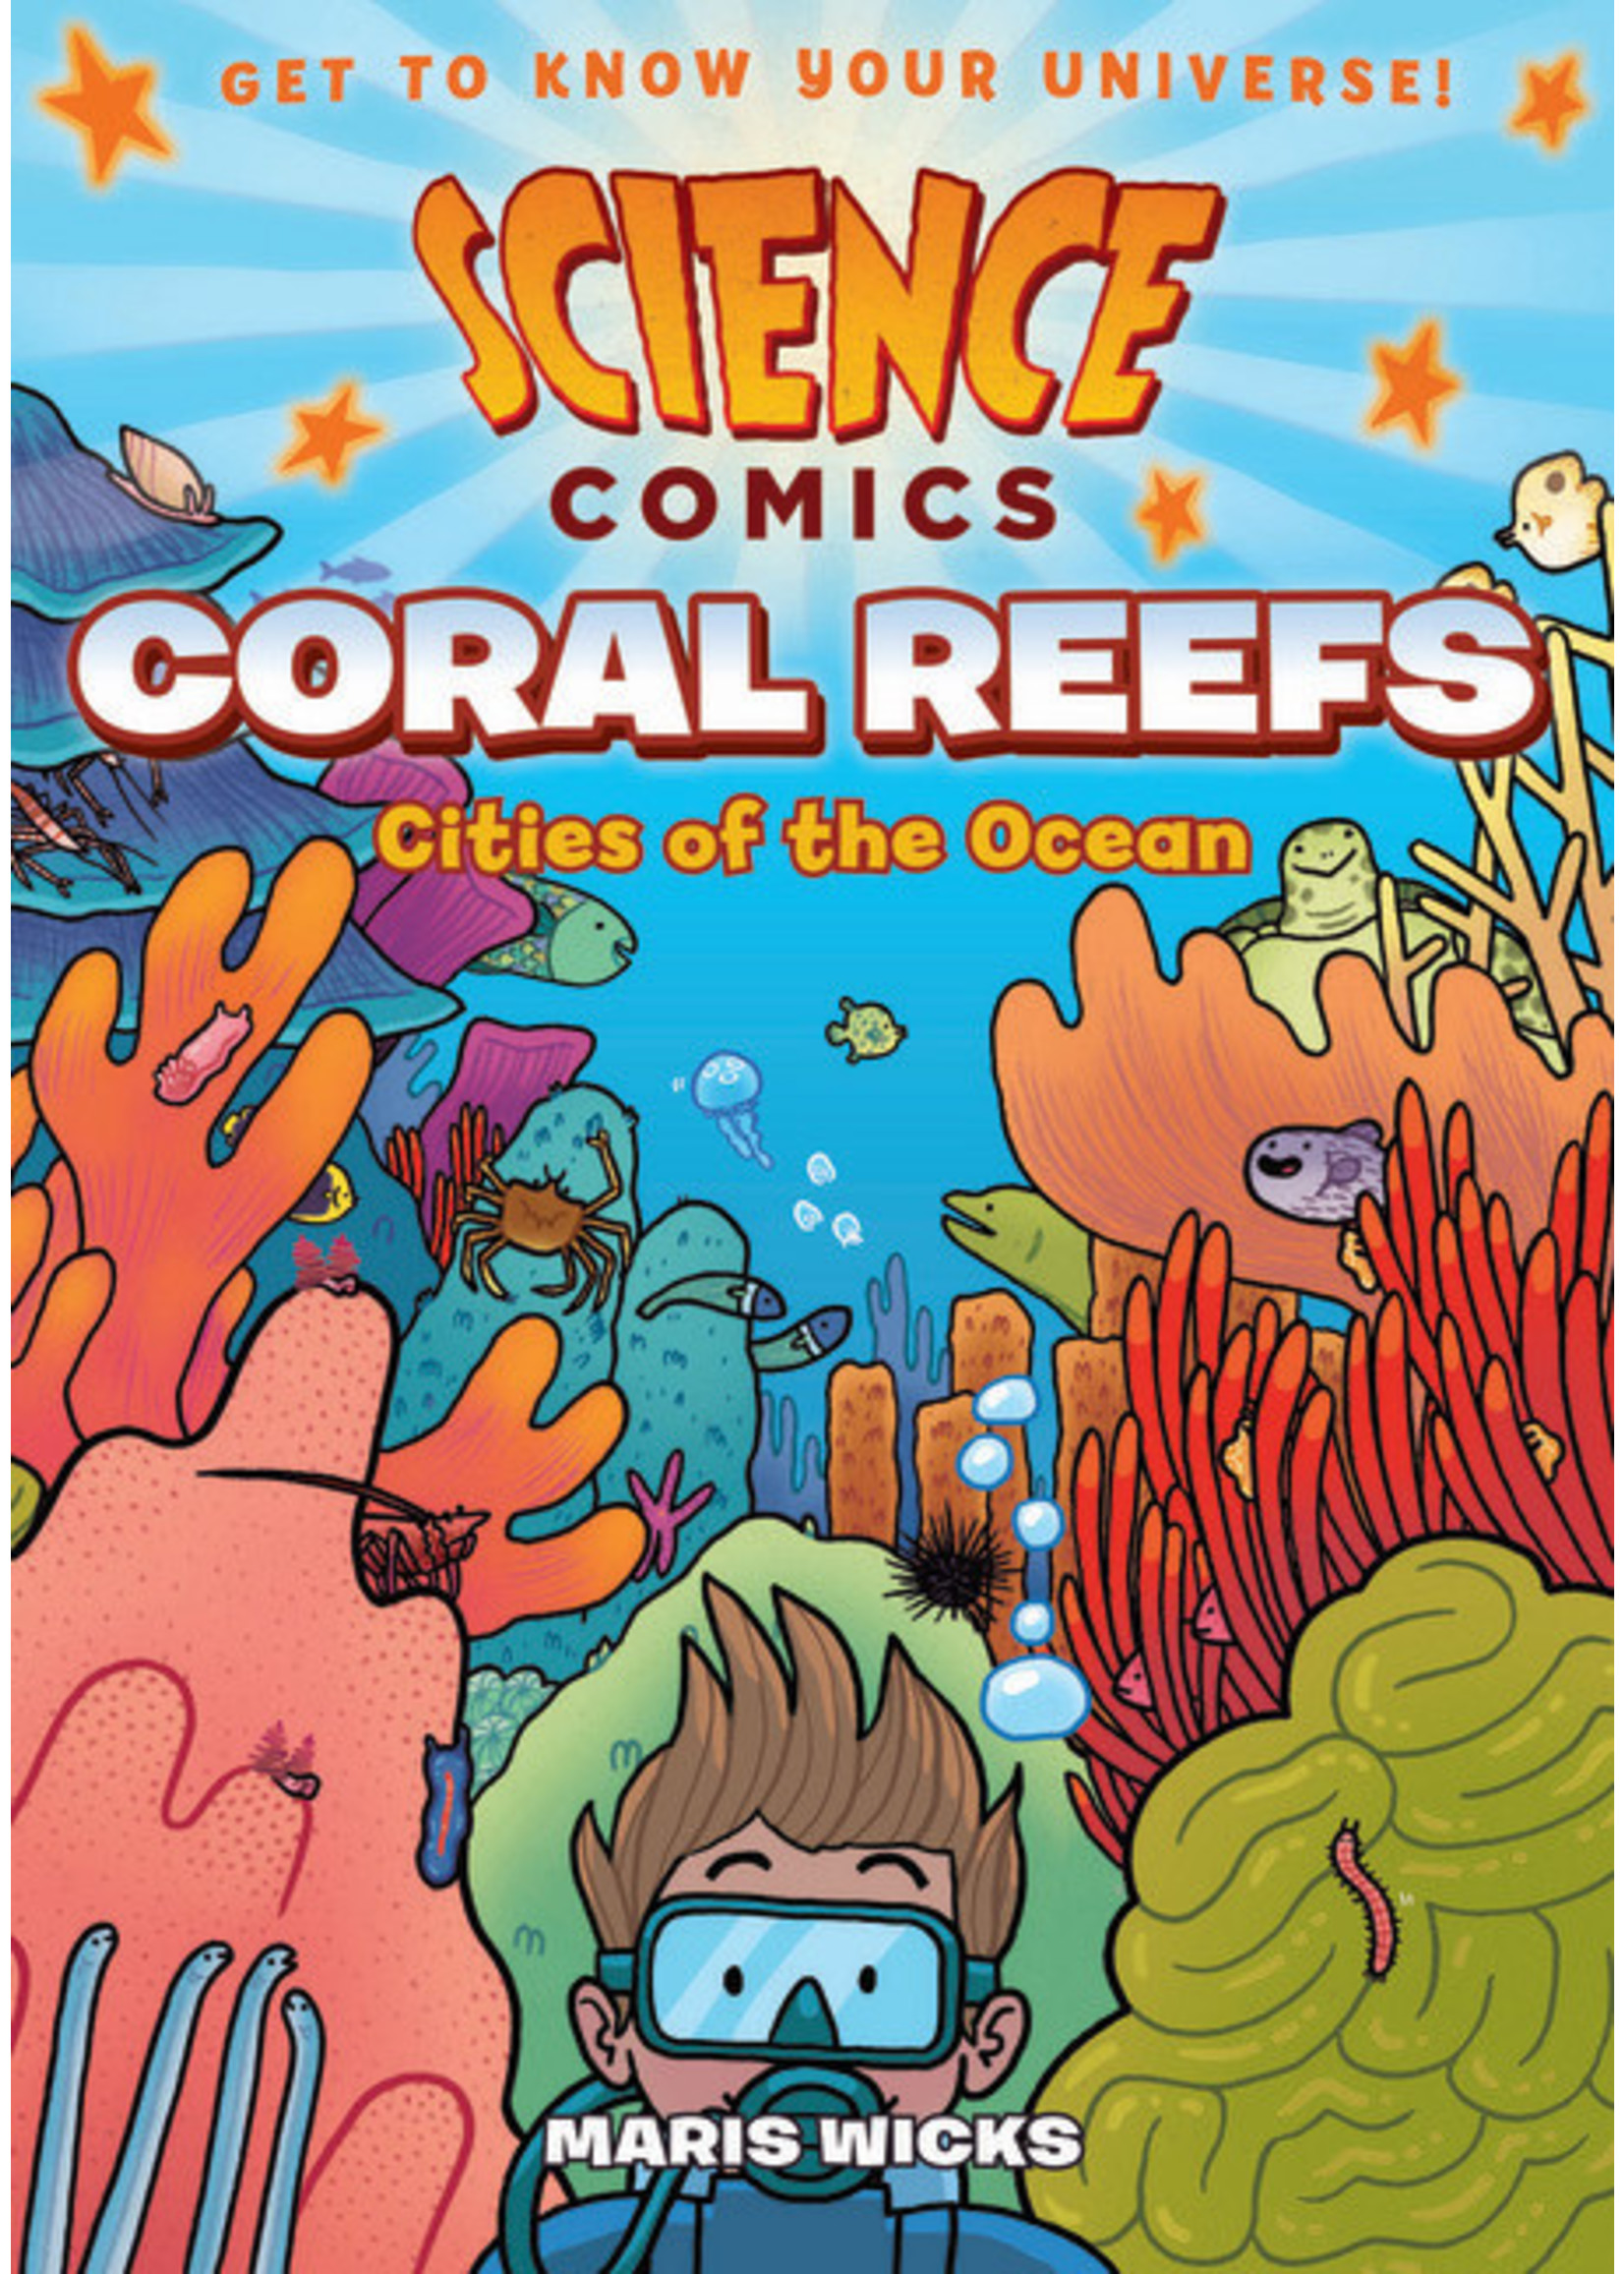 Science Comics: Coral Reefs - Cities of the Ocean by Maris Wicks